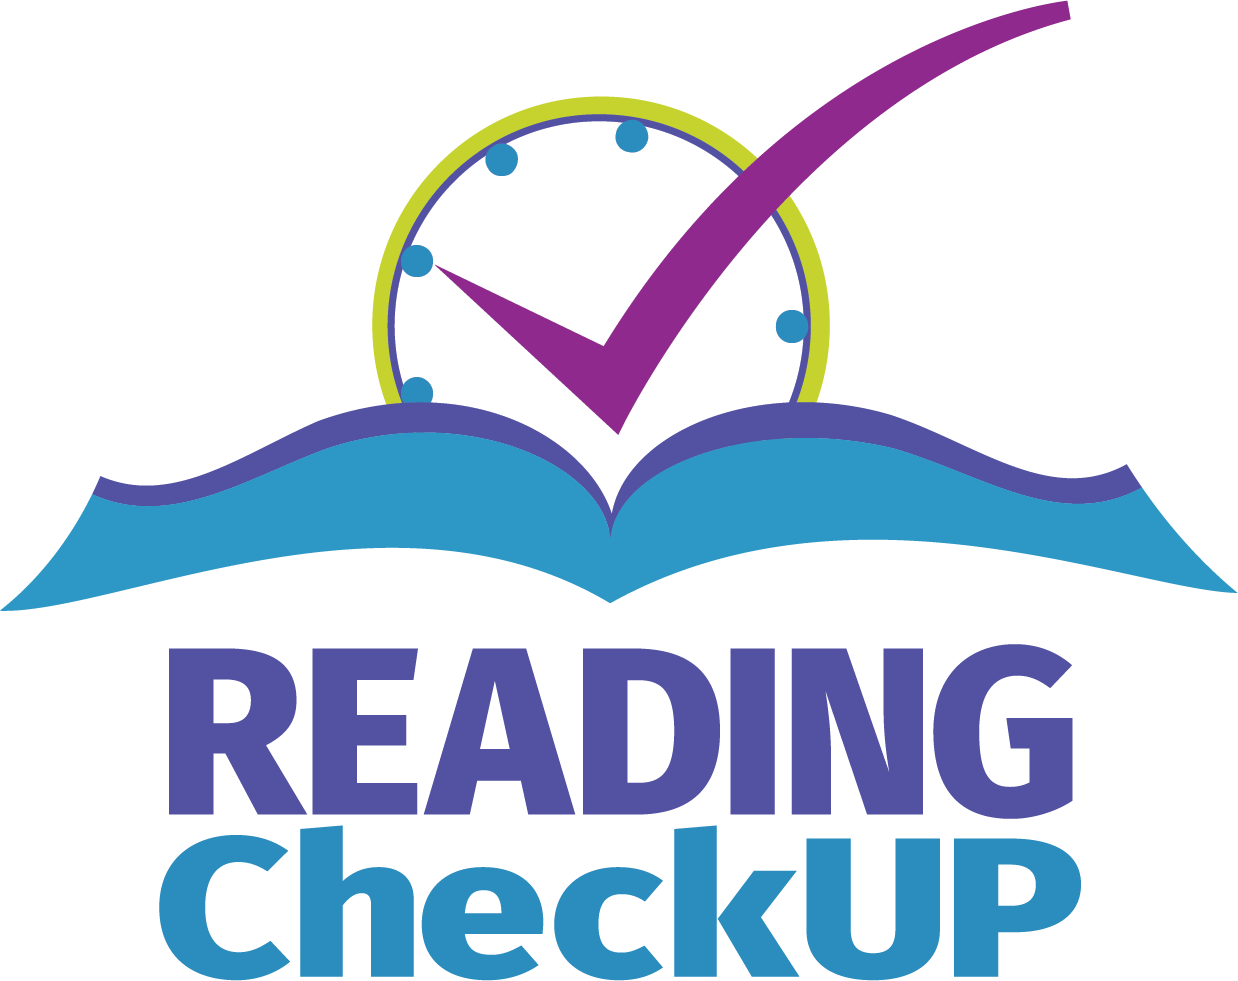 Readingcheckup logo